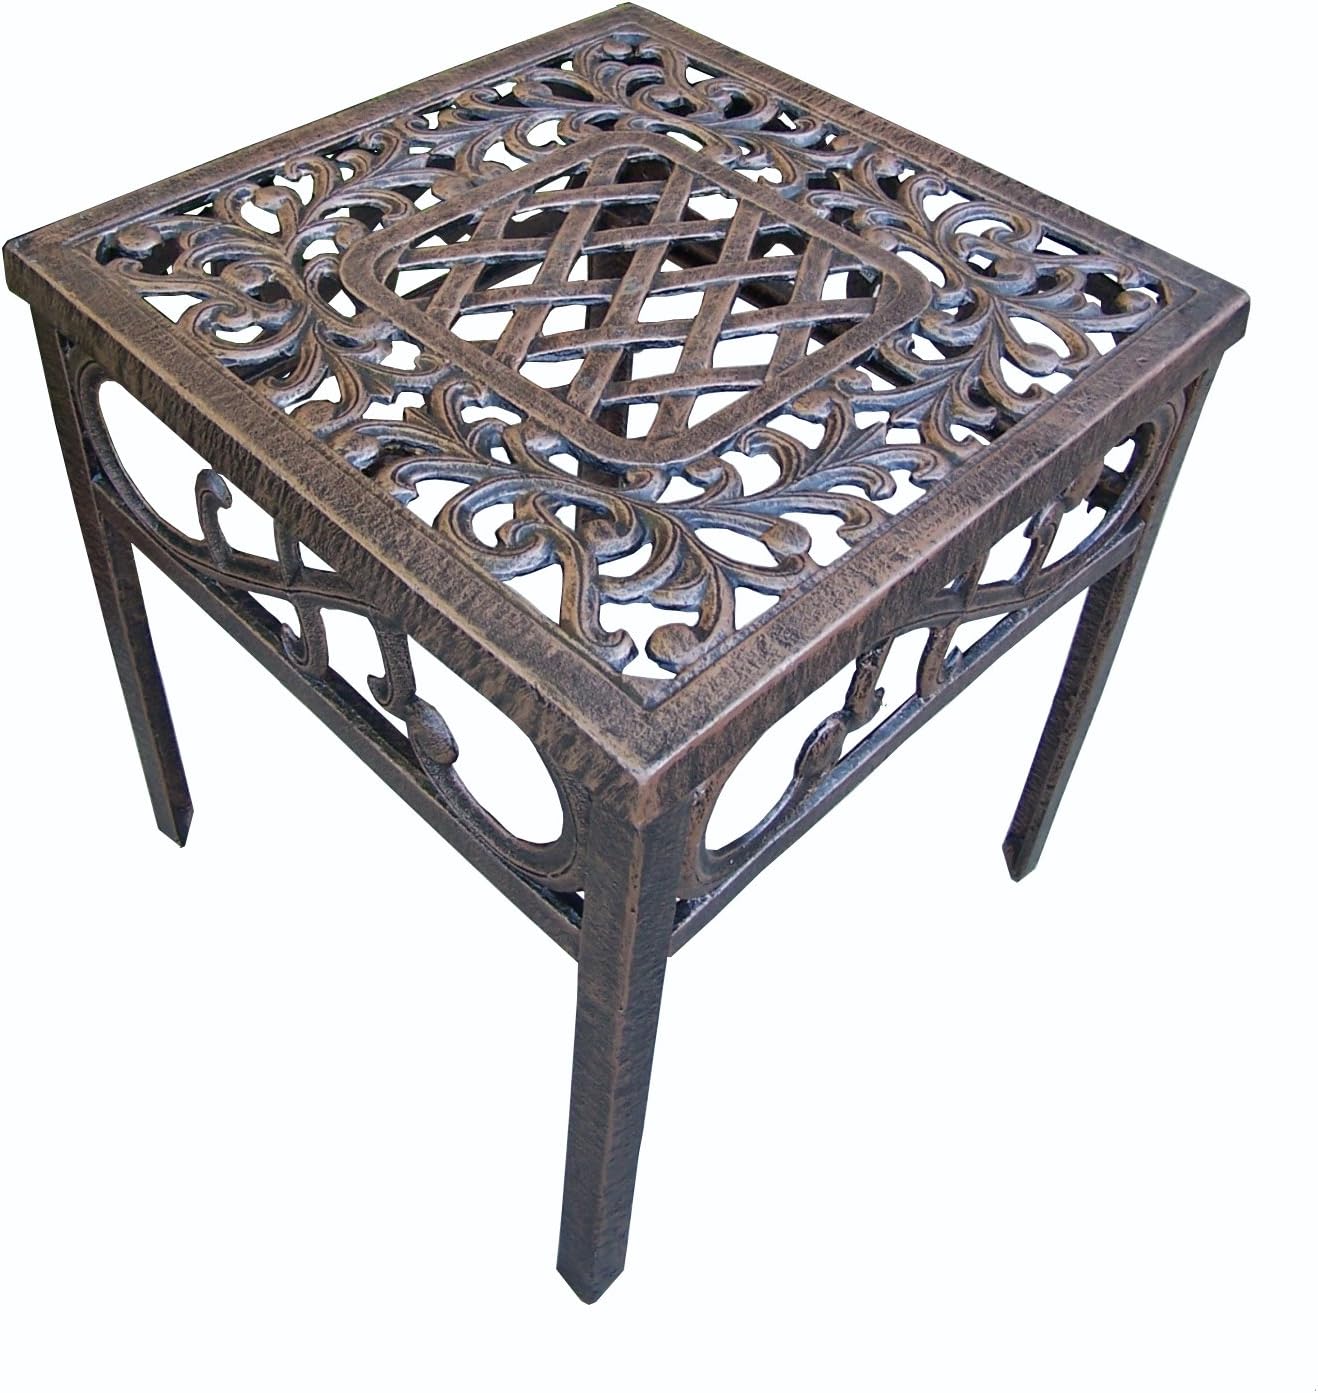 Oakland Living Mississippi Cast Aluminum End Table, 18-Inch, Antique Bronze